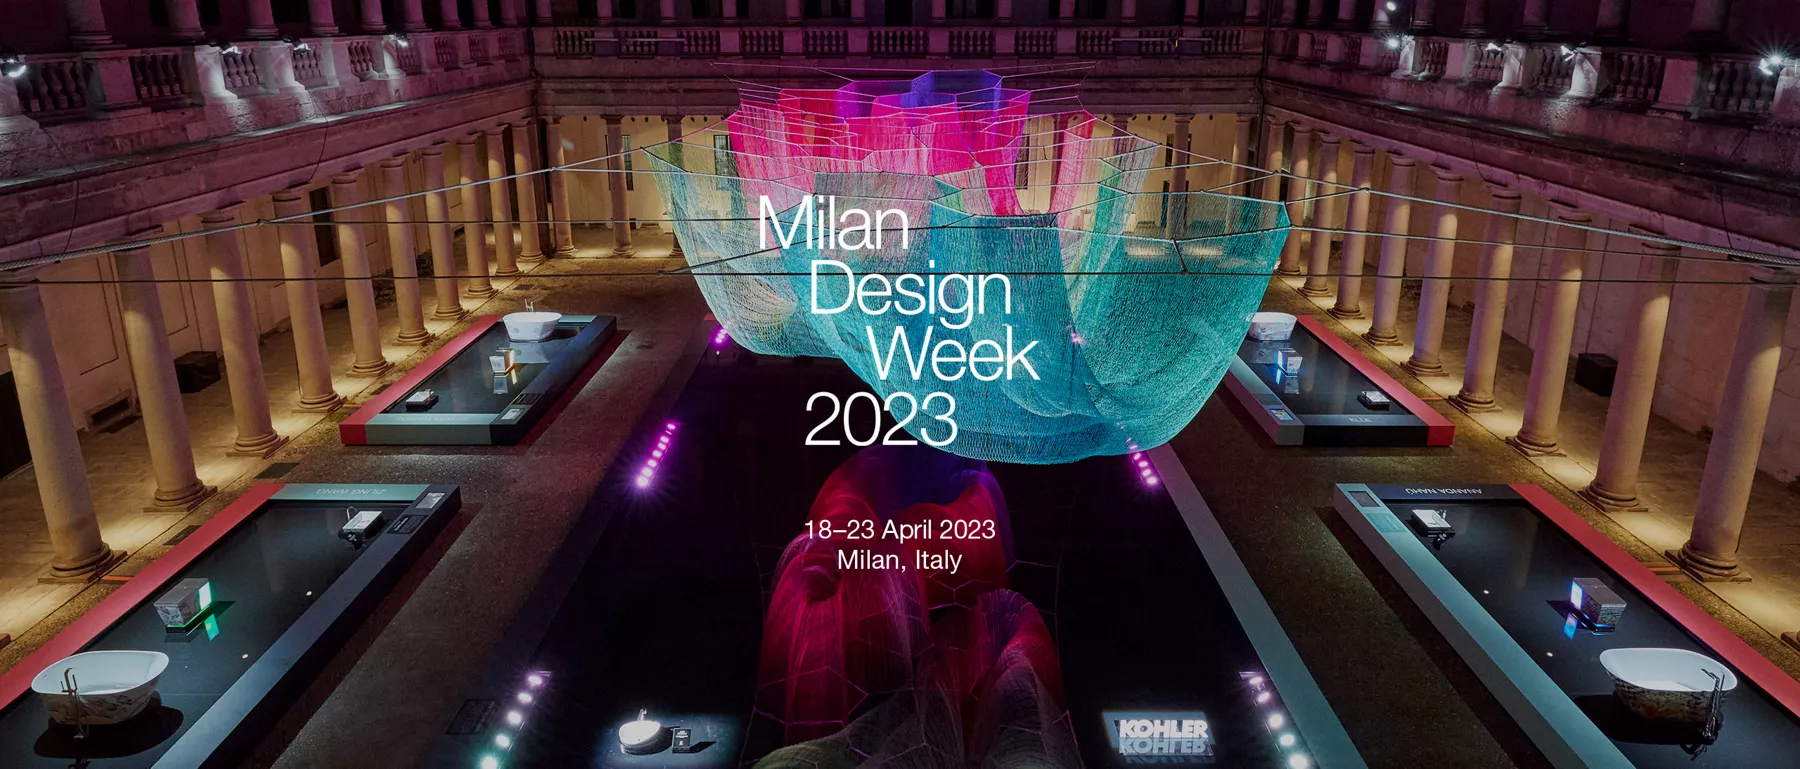 All the Fashion World Highlights at Milan Design Week 2023